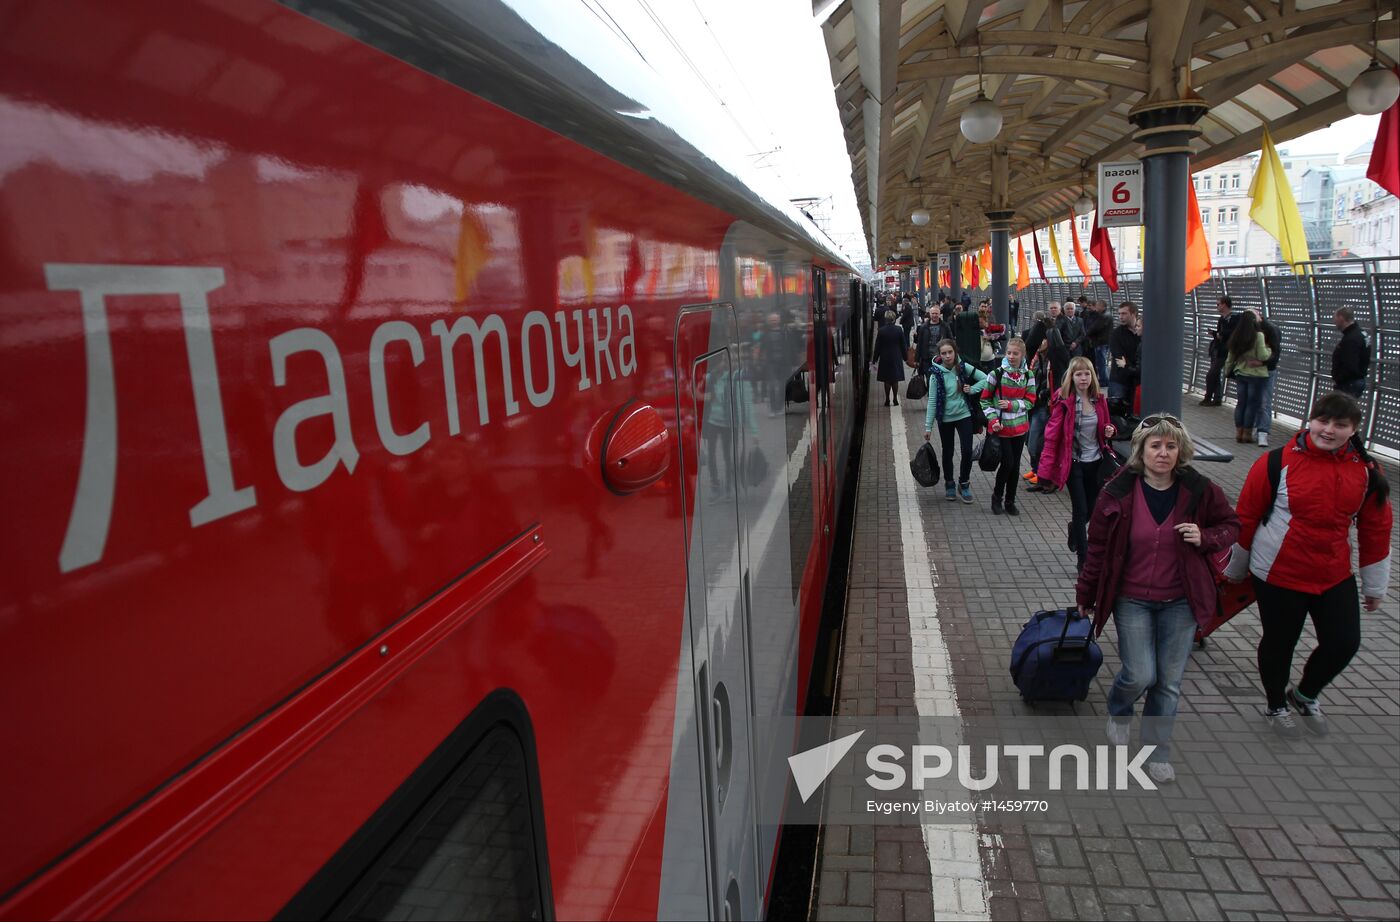 Train Lastochka (Swallow) makes its maiden voyage